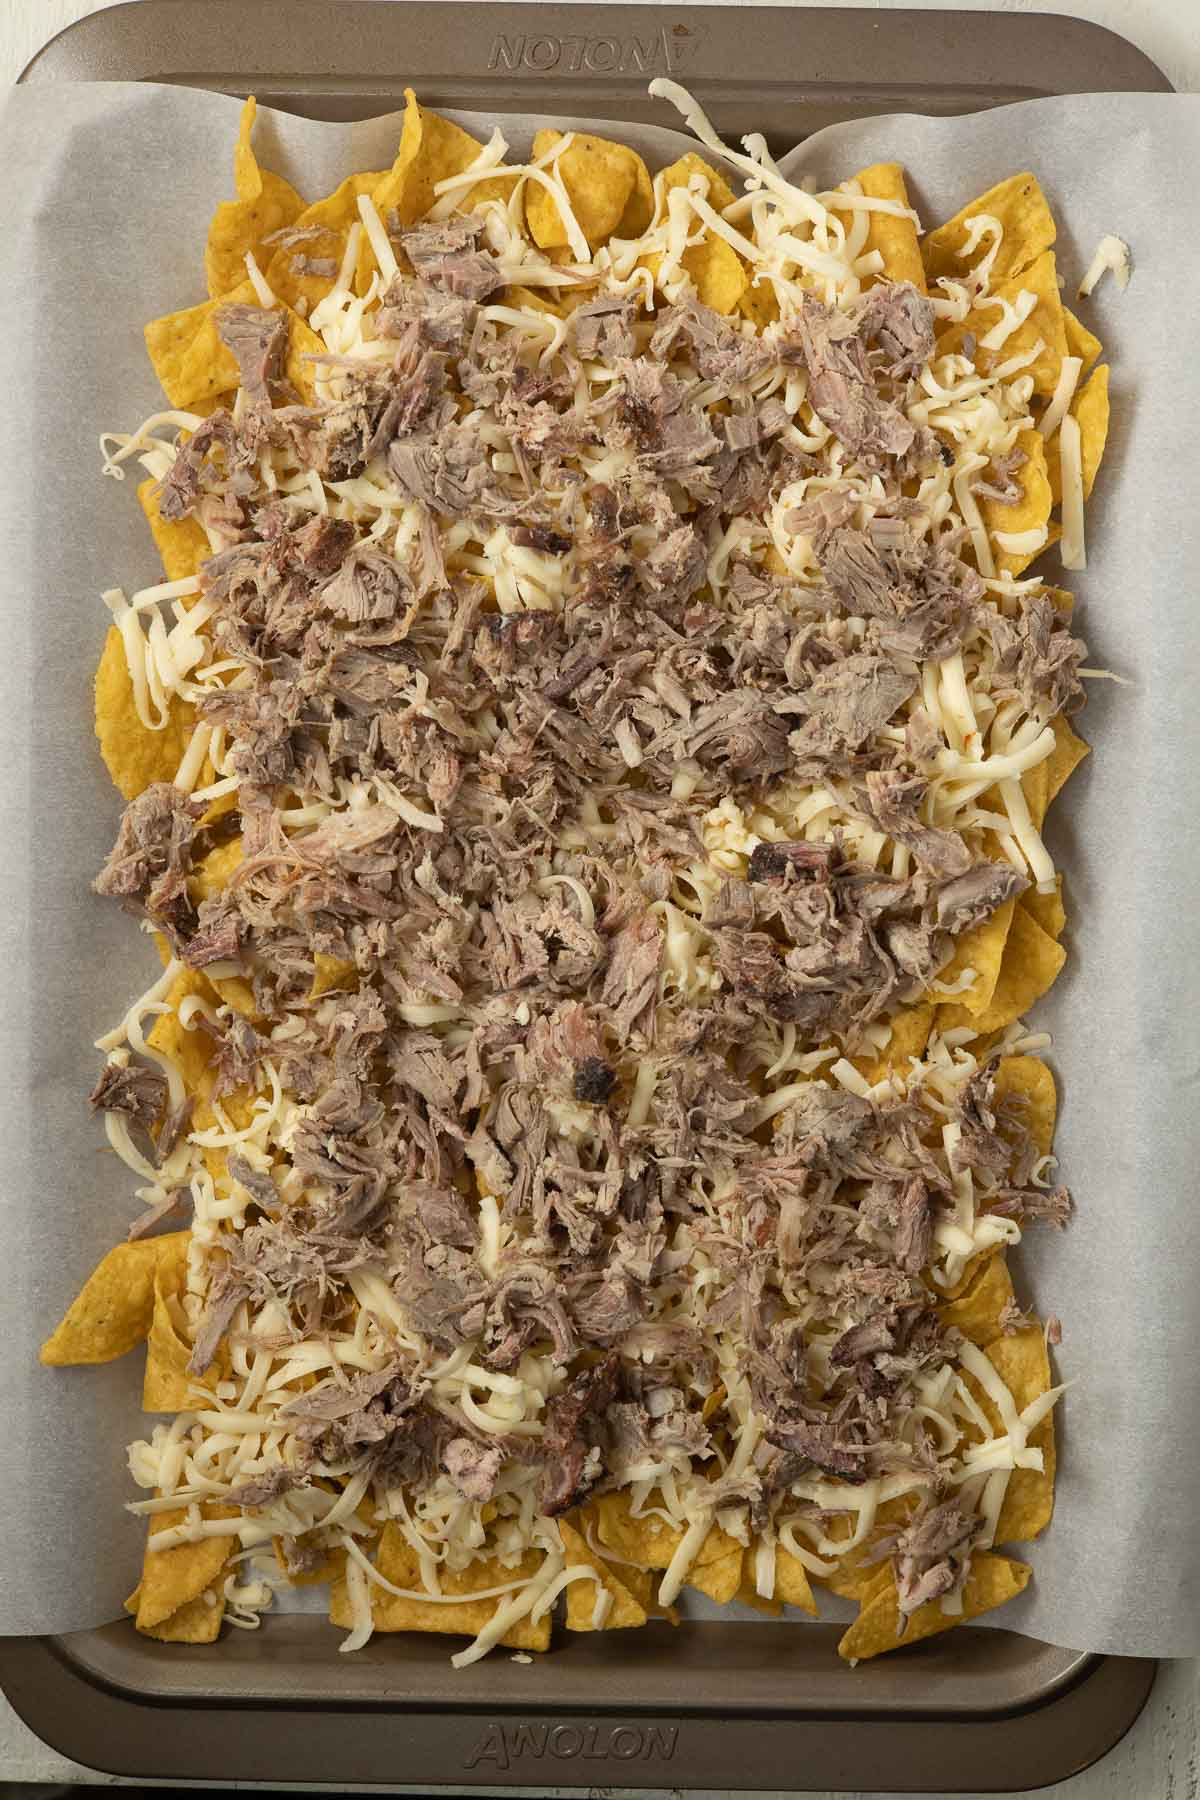 Nachos with cheese and shredded pork.